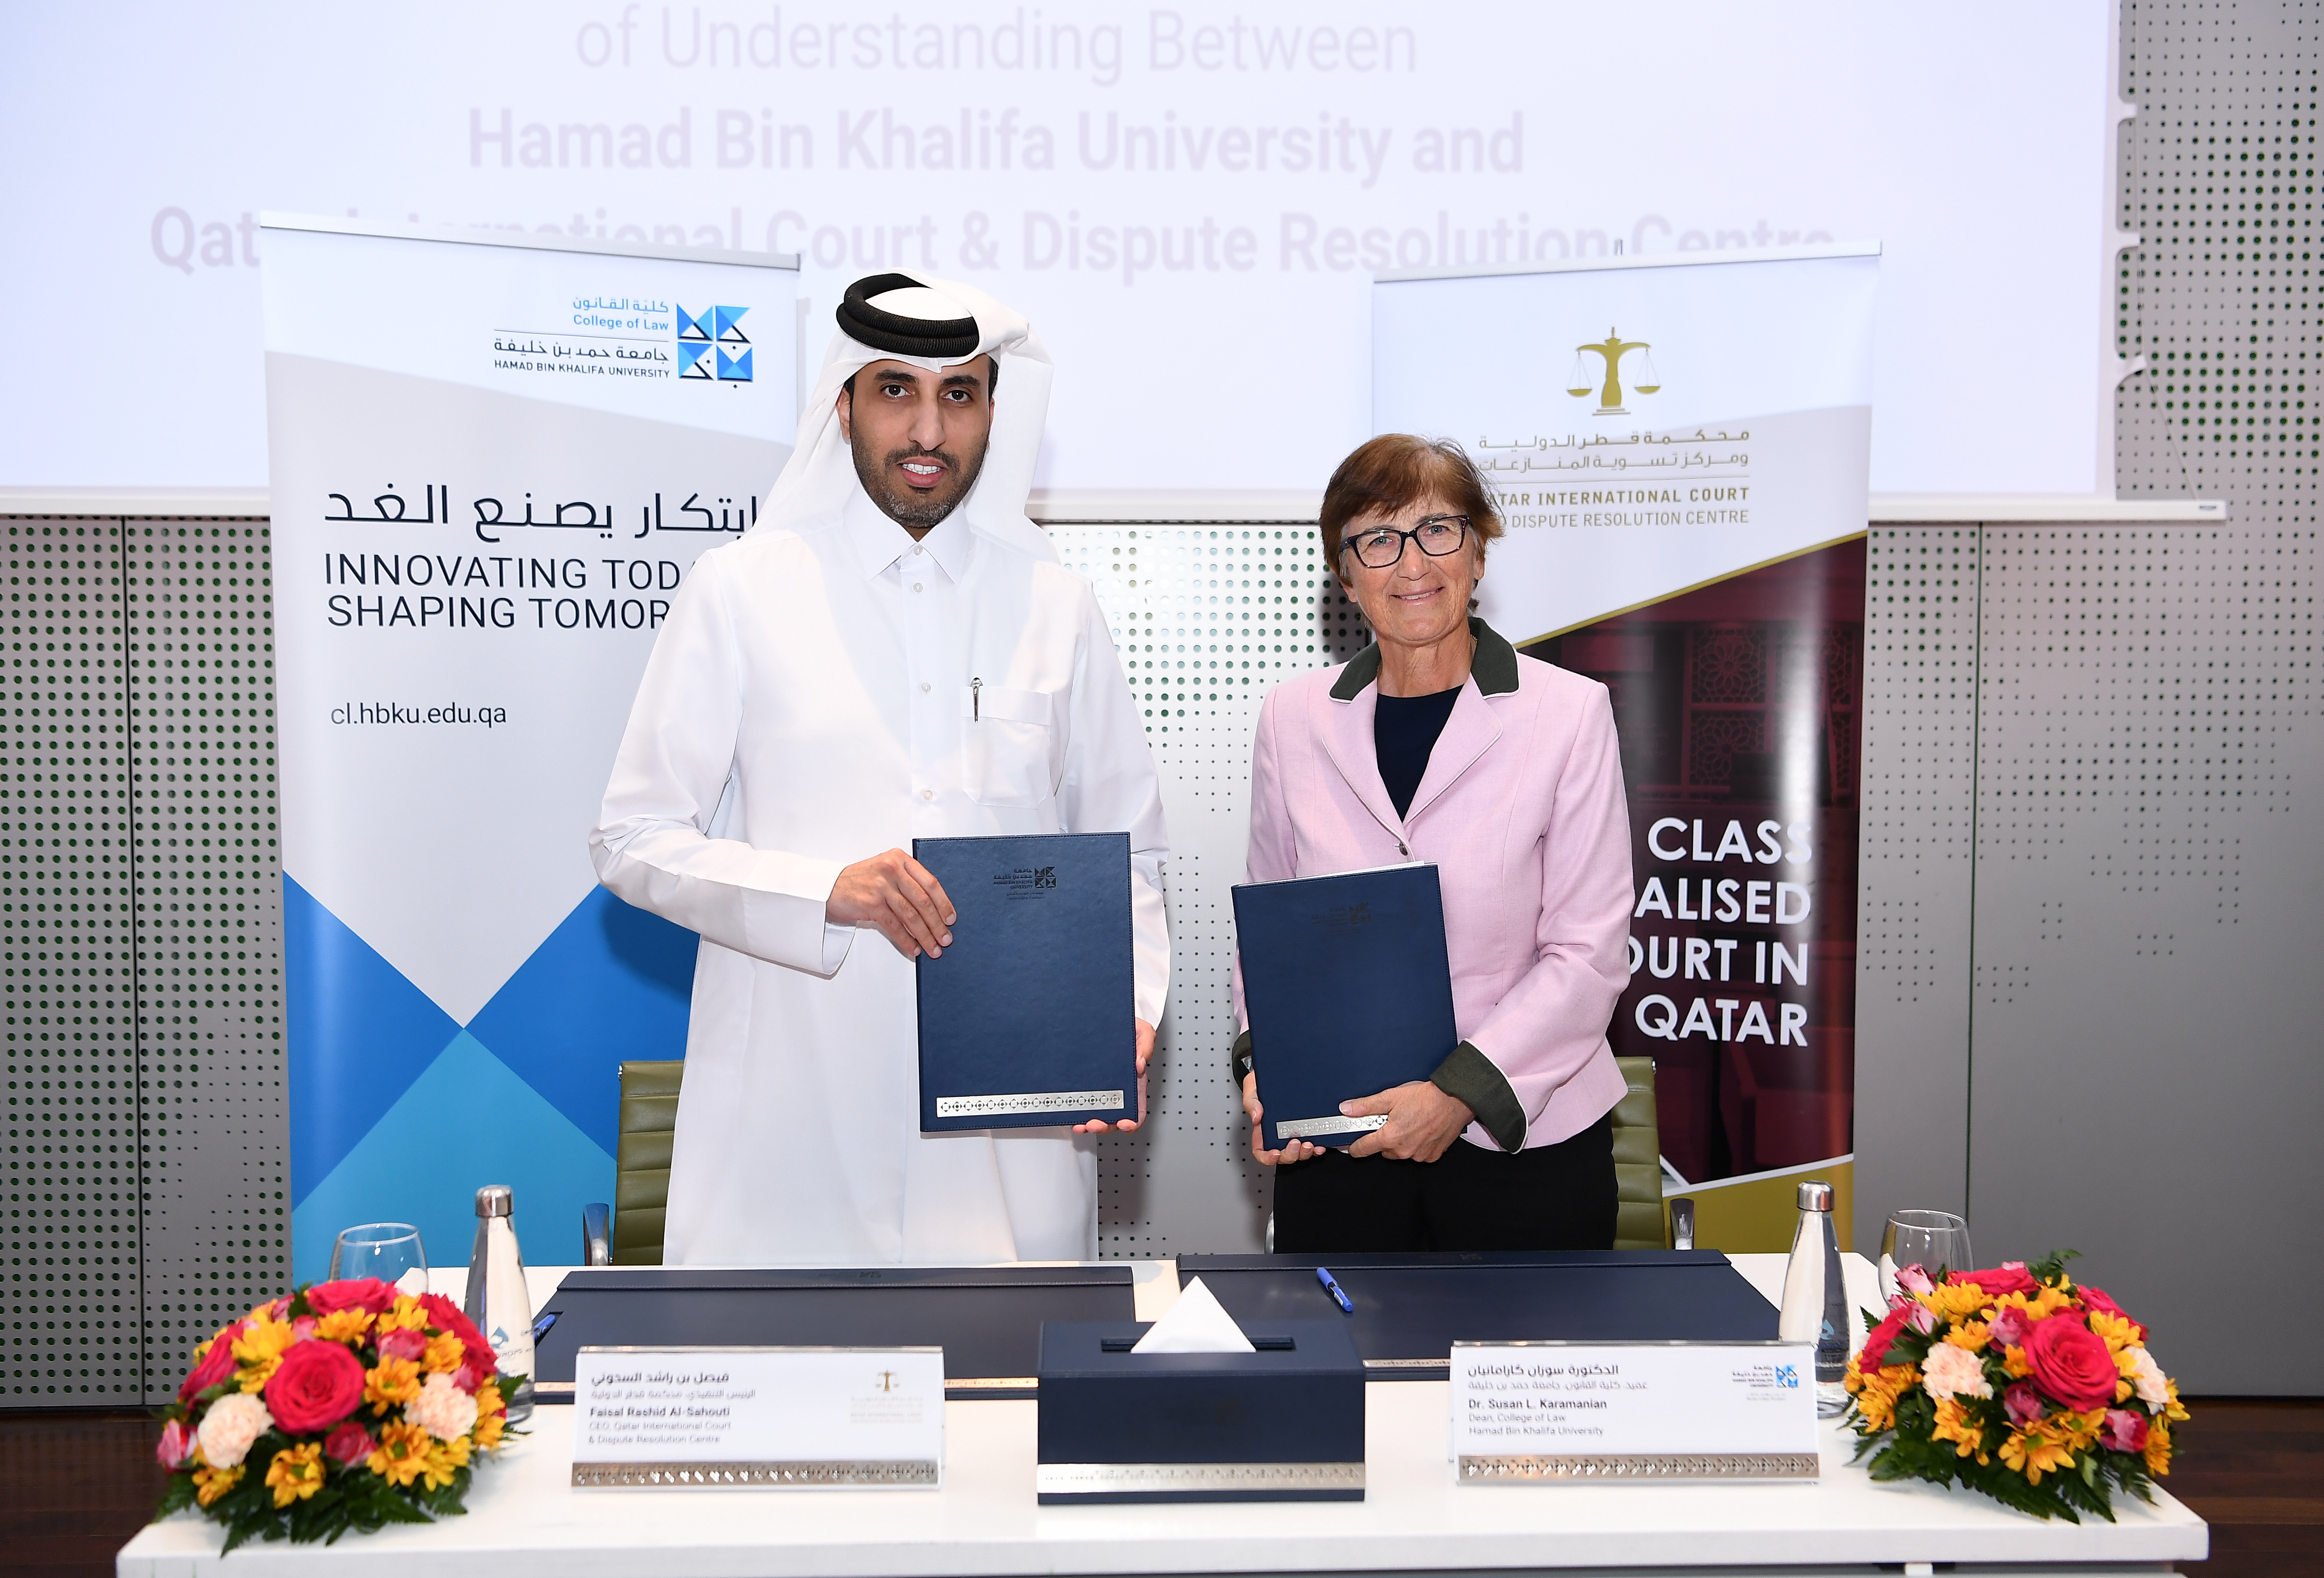 QICDRC and HBKU’s College of Law Enhance Partnership with Second Memorandum of Understanding